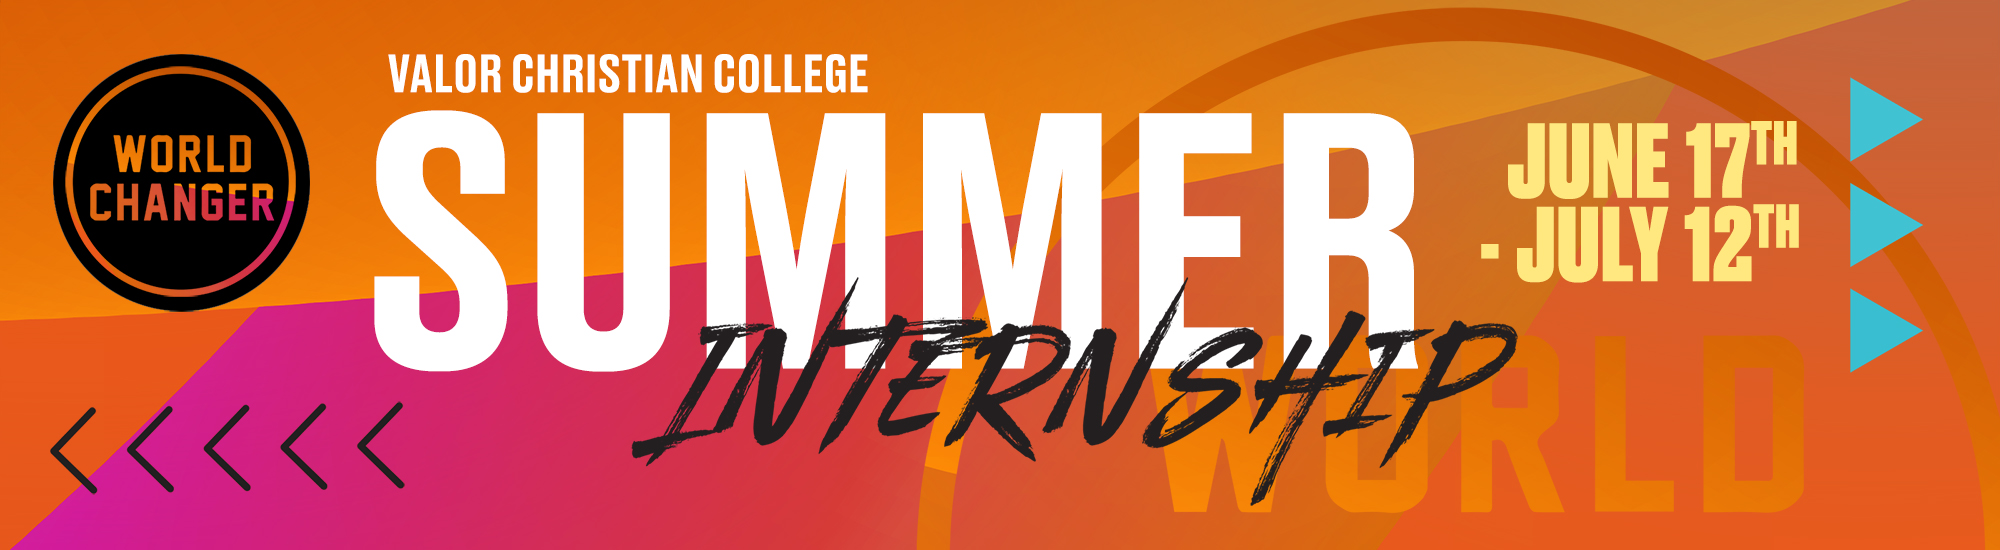 Valor Christian College Summer Internship June 17th - July 12th